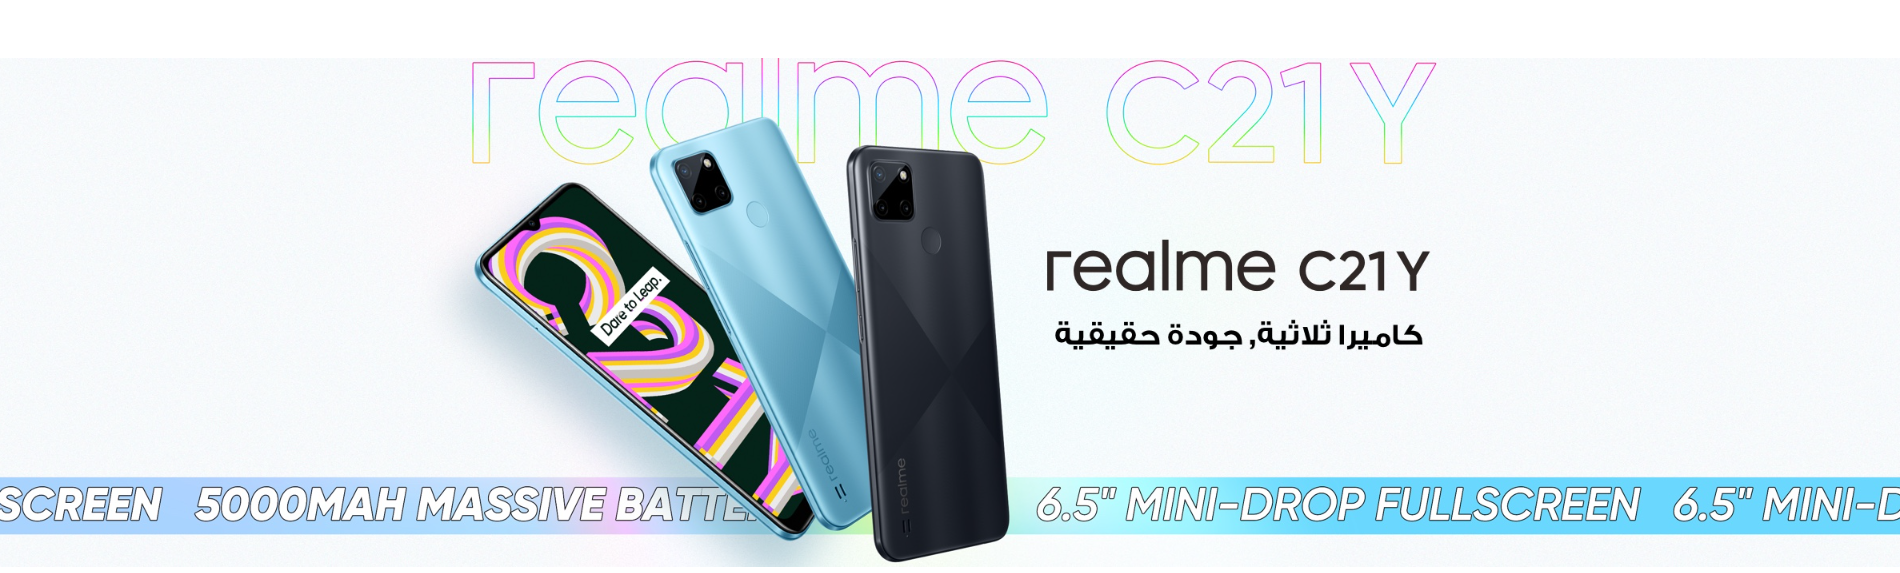 Realme C21y 4GB RAM 64 GB - Black